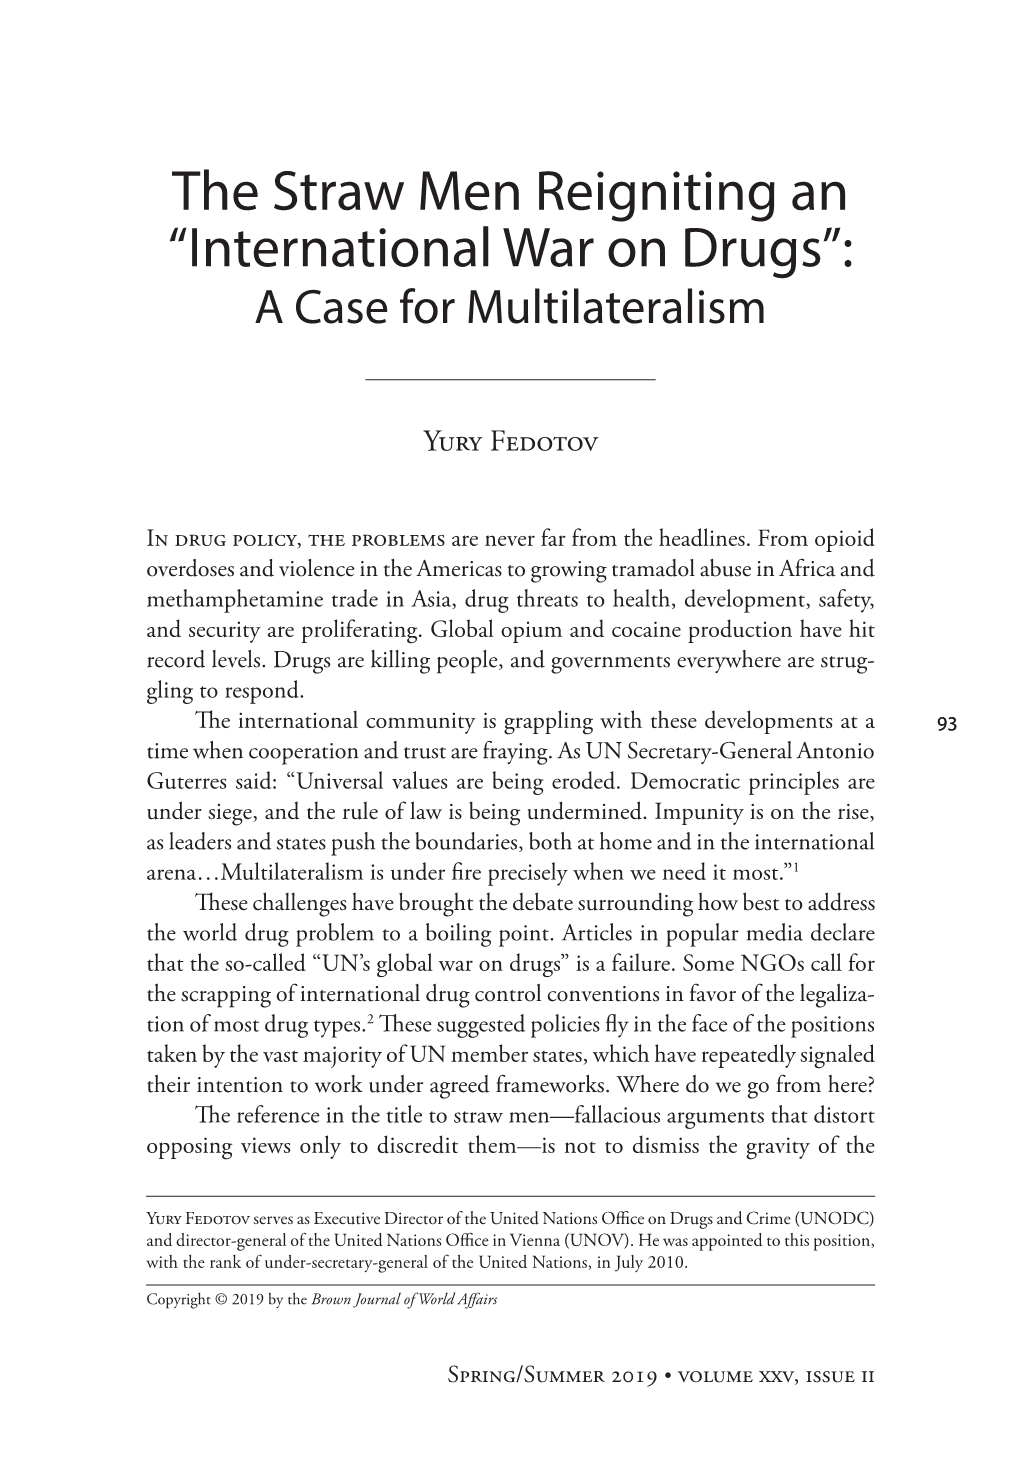 International War on Drugs”: a Case for Multilateralism